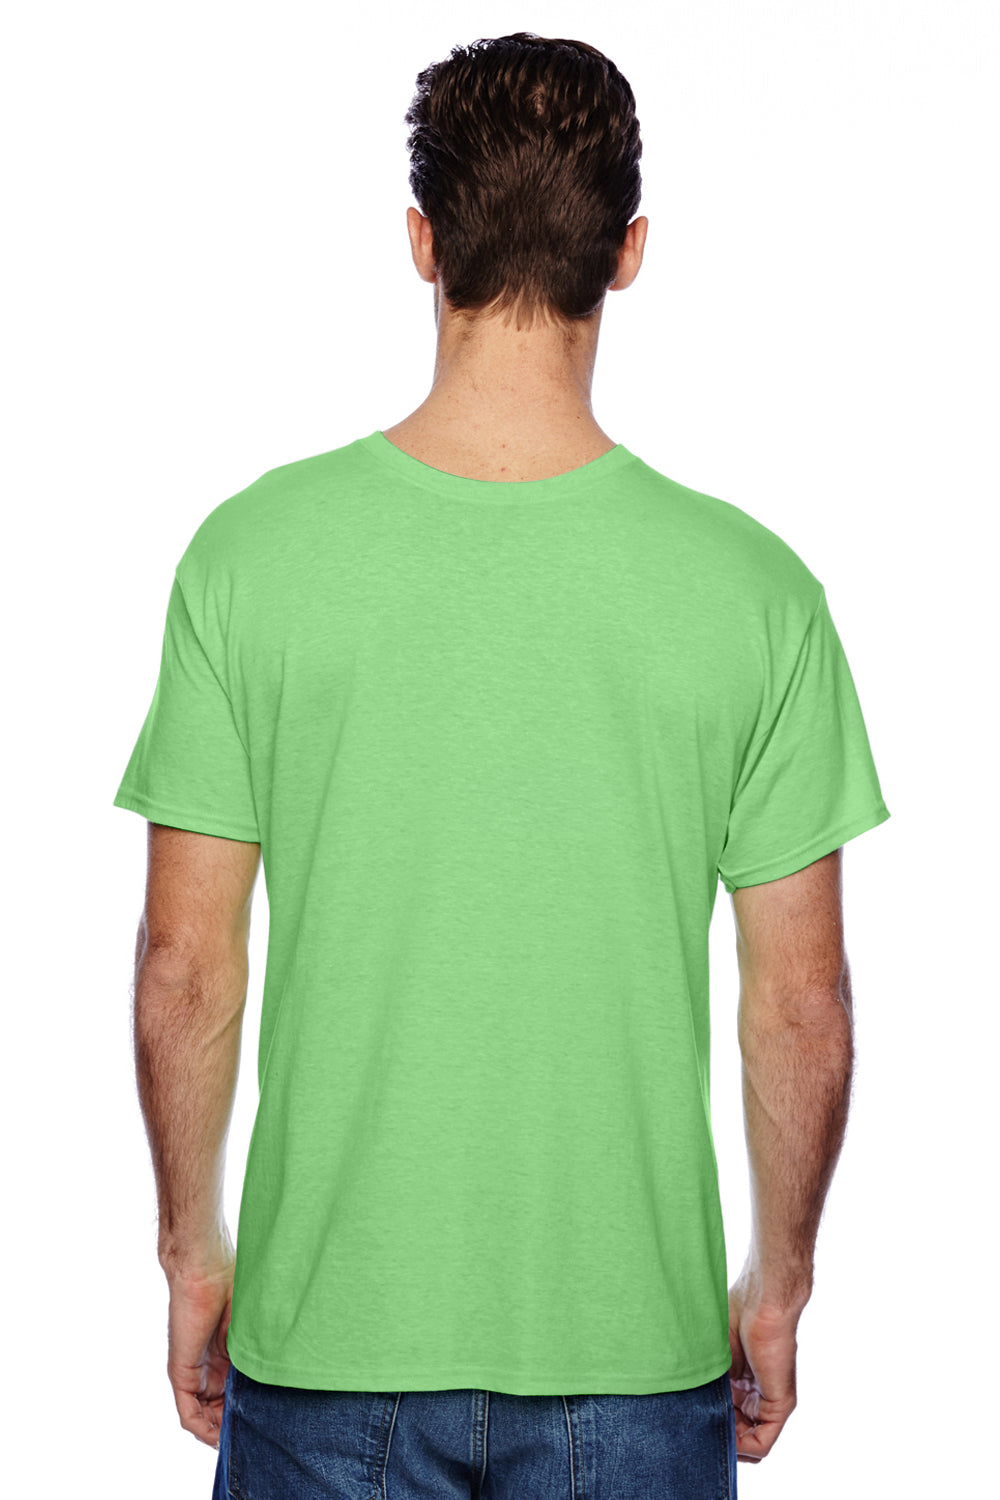 Hanes P4200 Mens X-Temp Moisture Wicking Short Sleeve Crewneck T-Shirt Heather Neon Lime Green Back